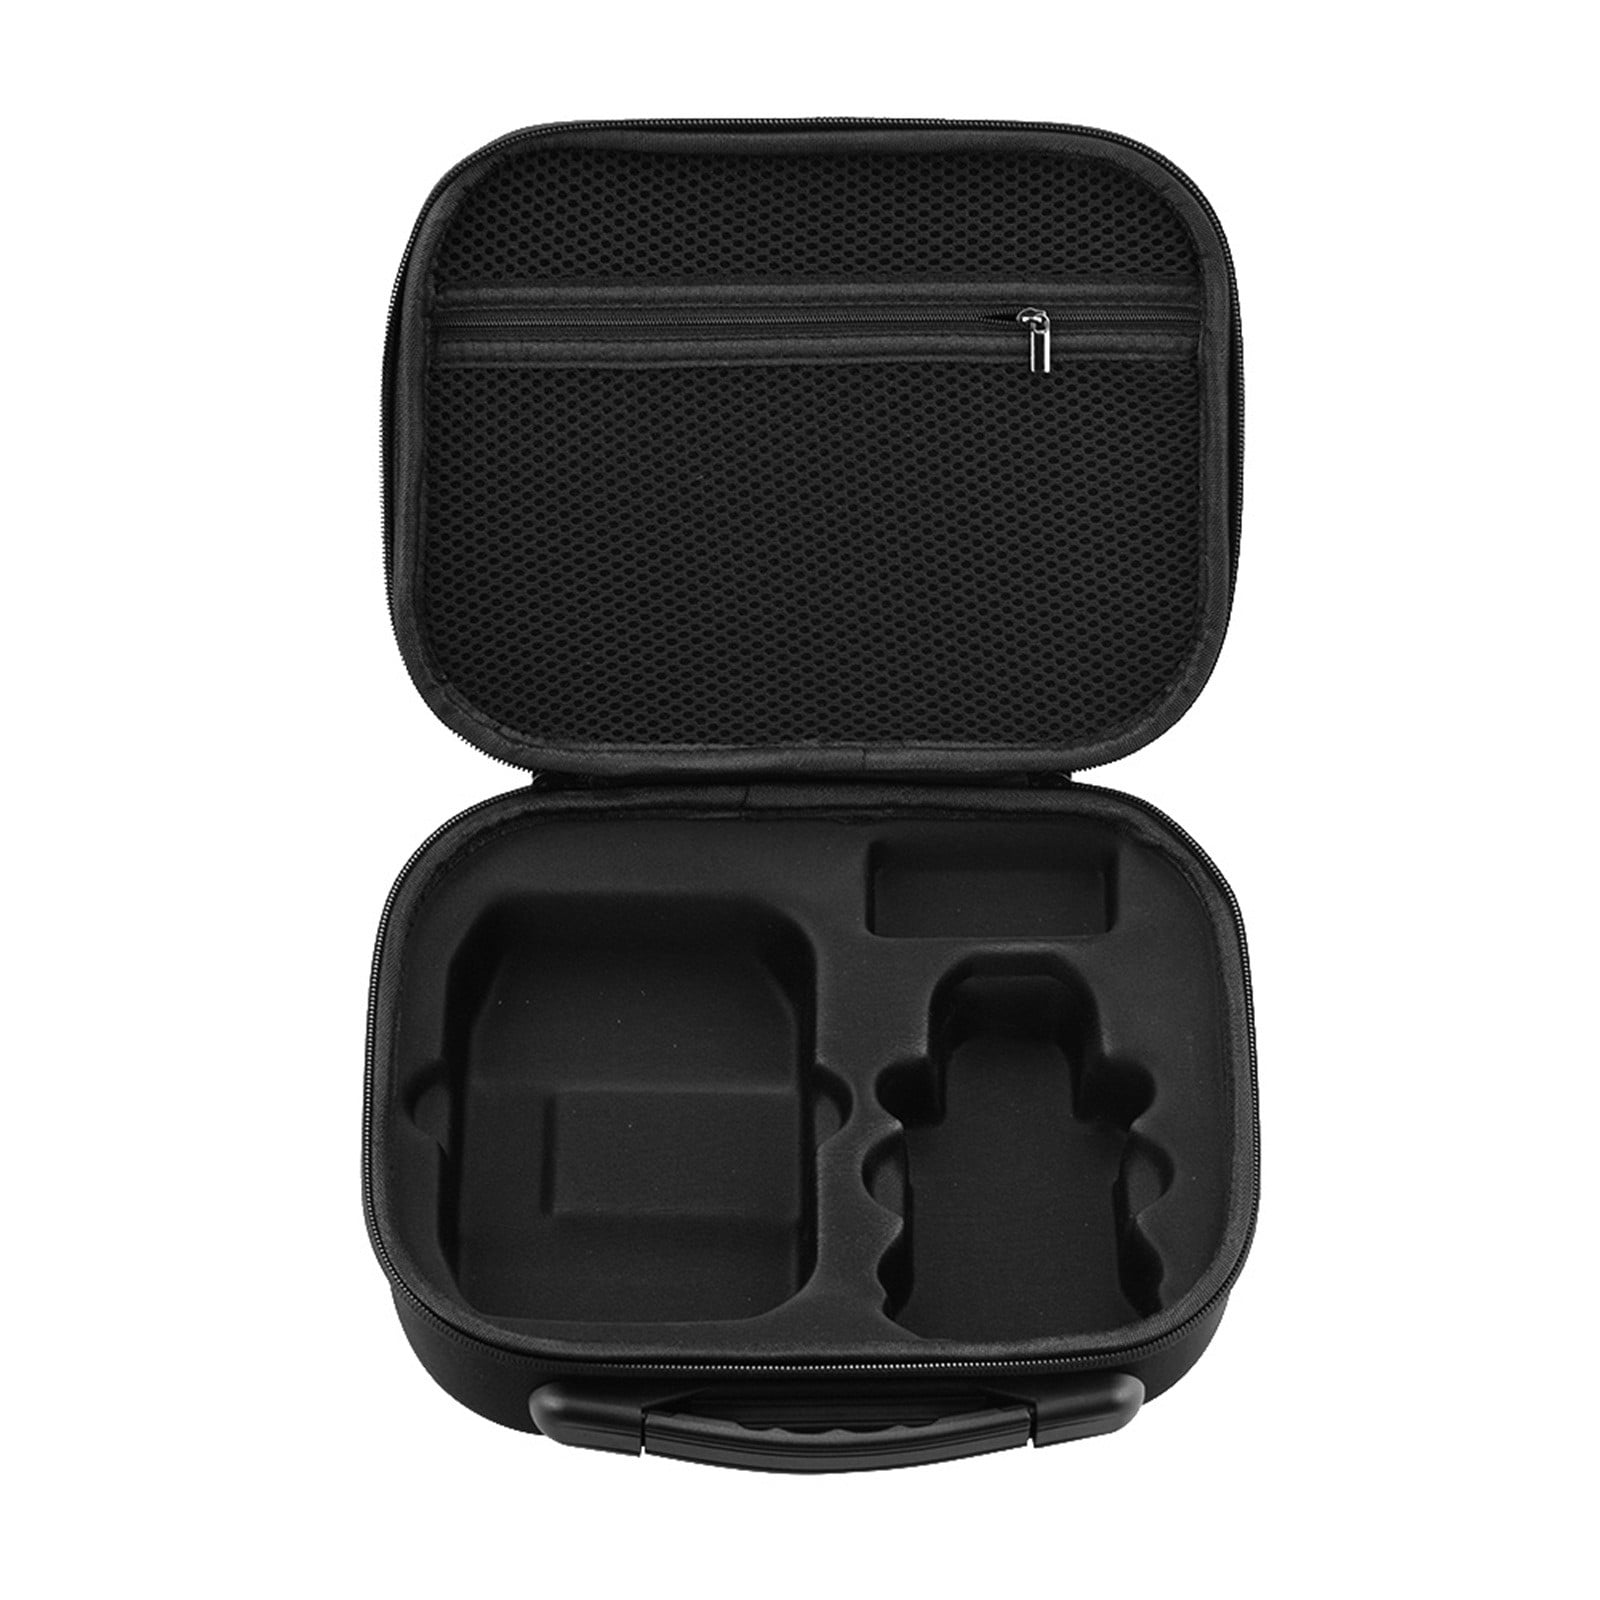 Carrying Case Storage Bag Protective For DJI Mavic Air 2 Drone Storage box